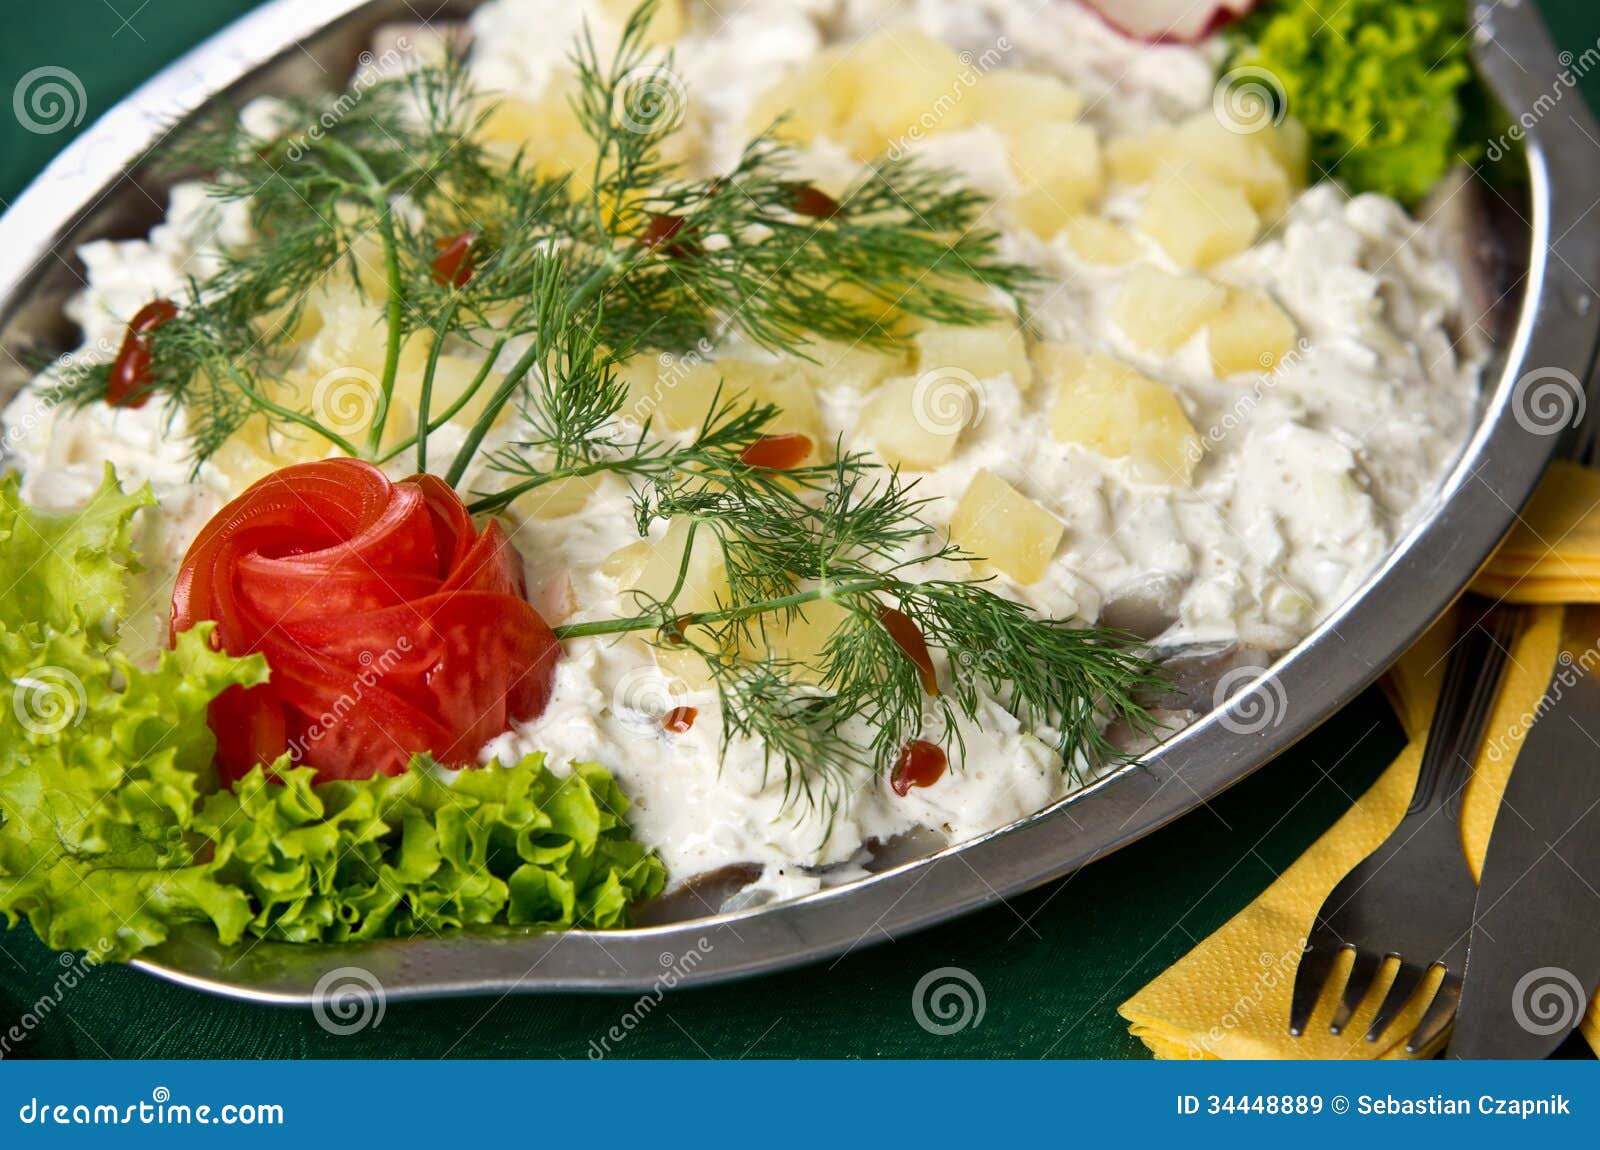 Herring Salad Dish Royalty Free Stock Images - Image: 34448889